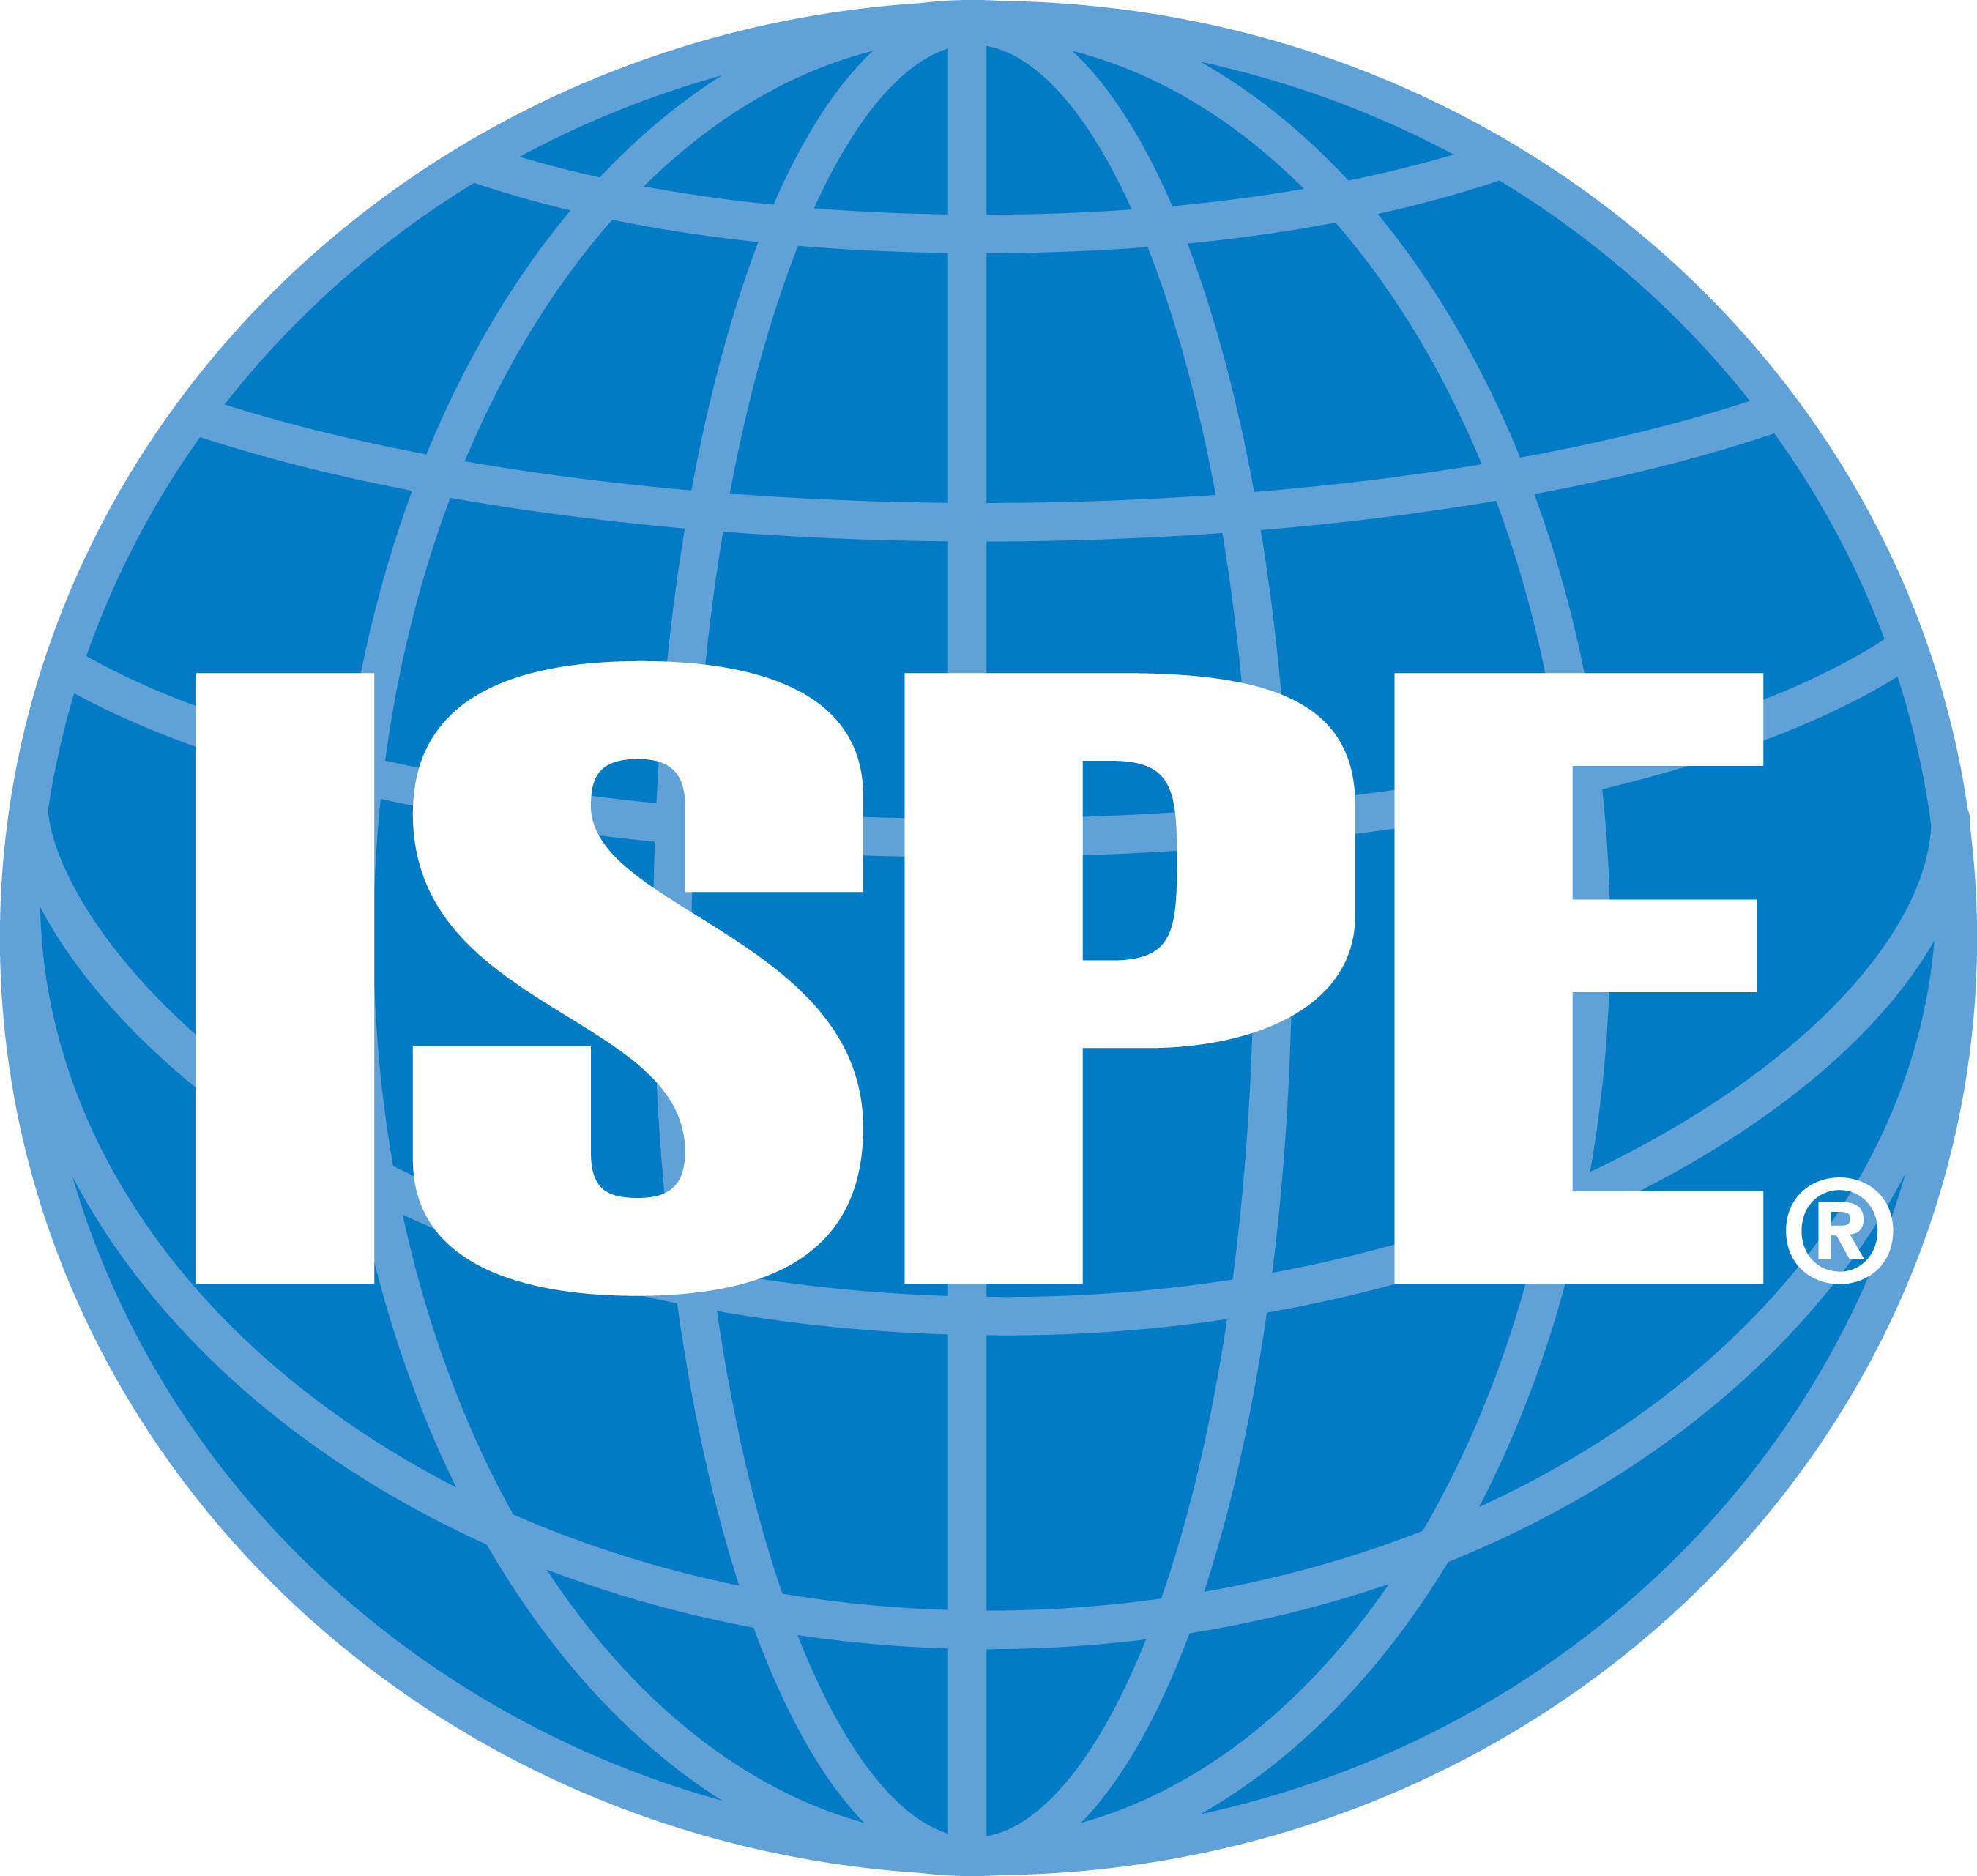 ISPE logo. (PRNewsFoto/ISPE) (PRNewsFoto/ISPE)